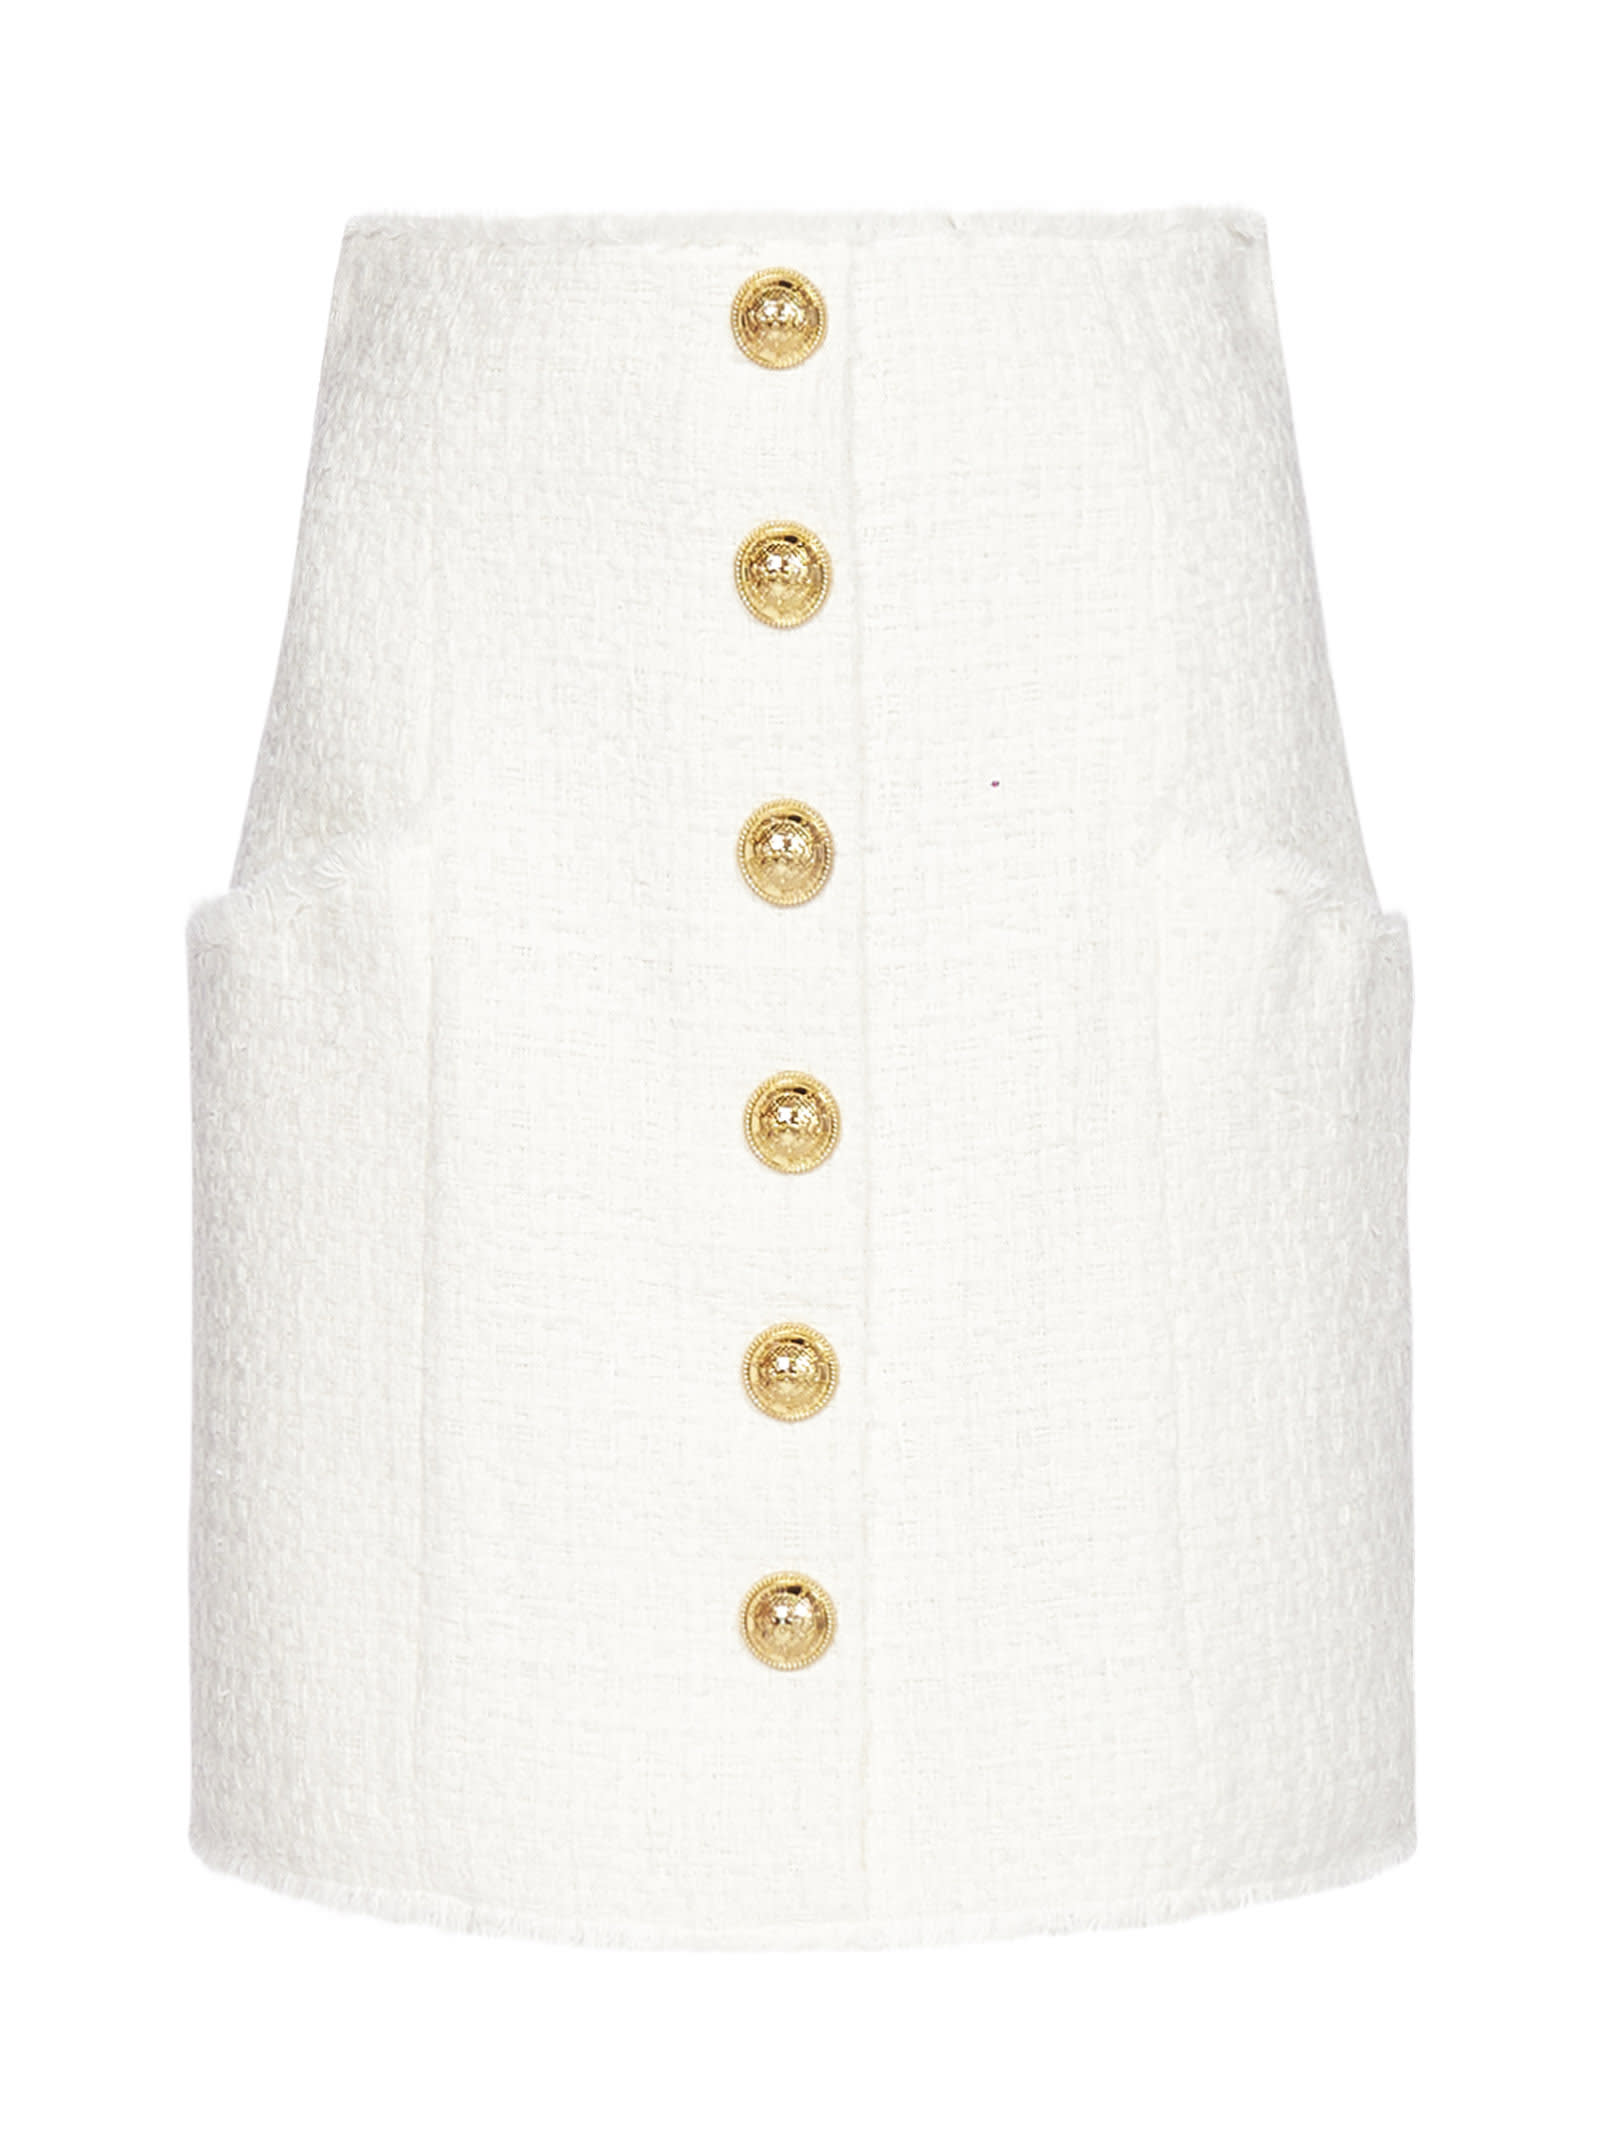 Balmain Buttoned Cotton Tweed Miniskirt